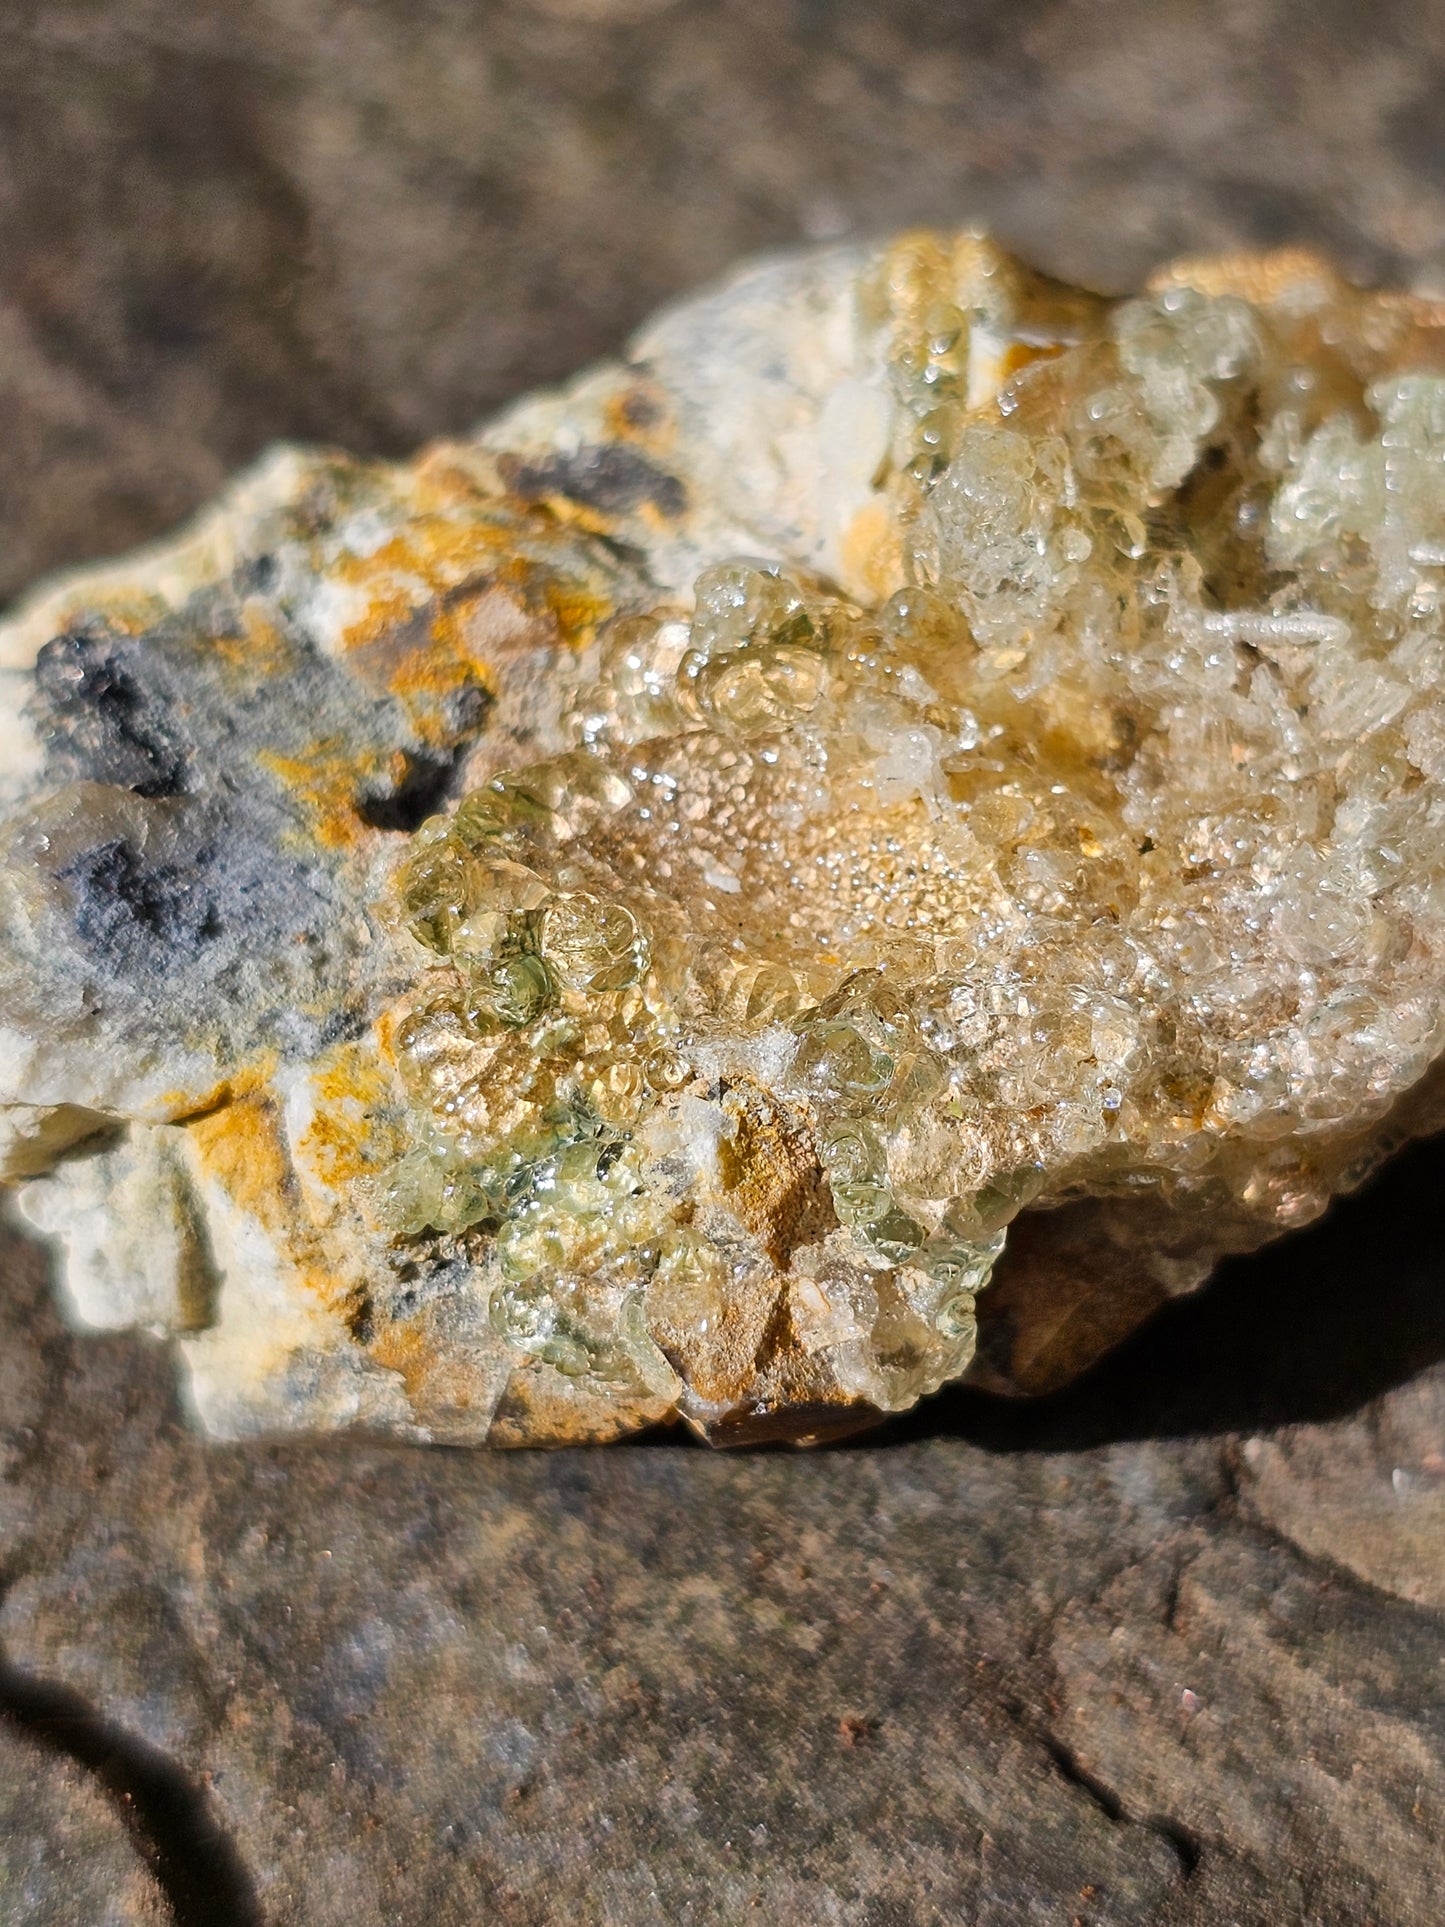 Opale Hyalite (fluorescente)OH4